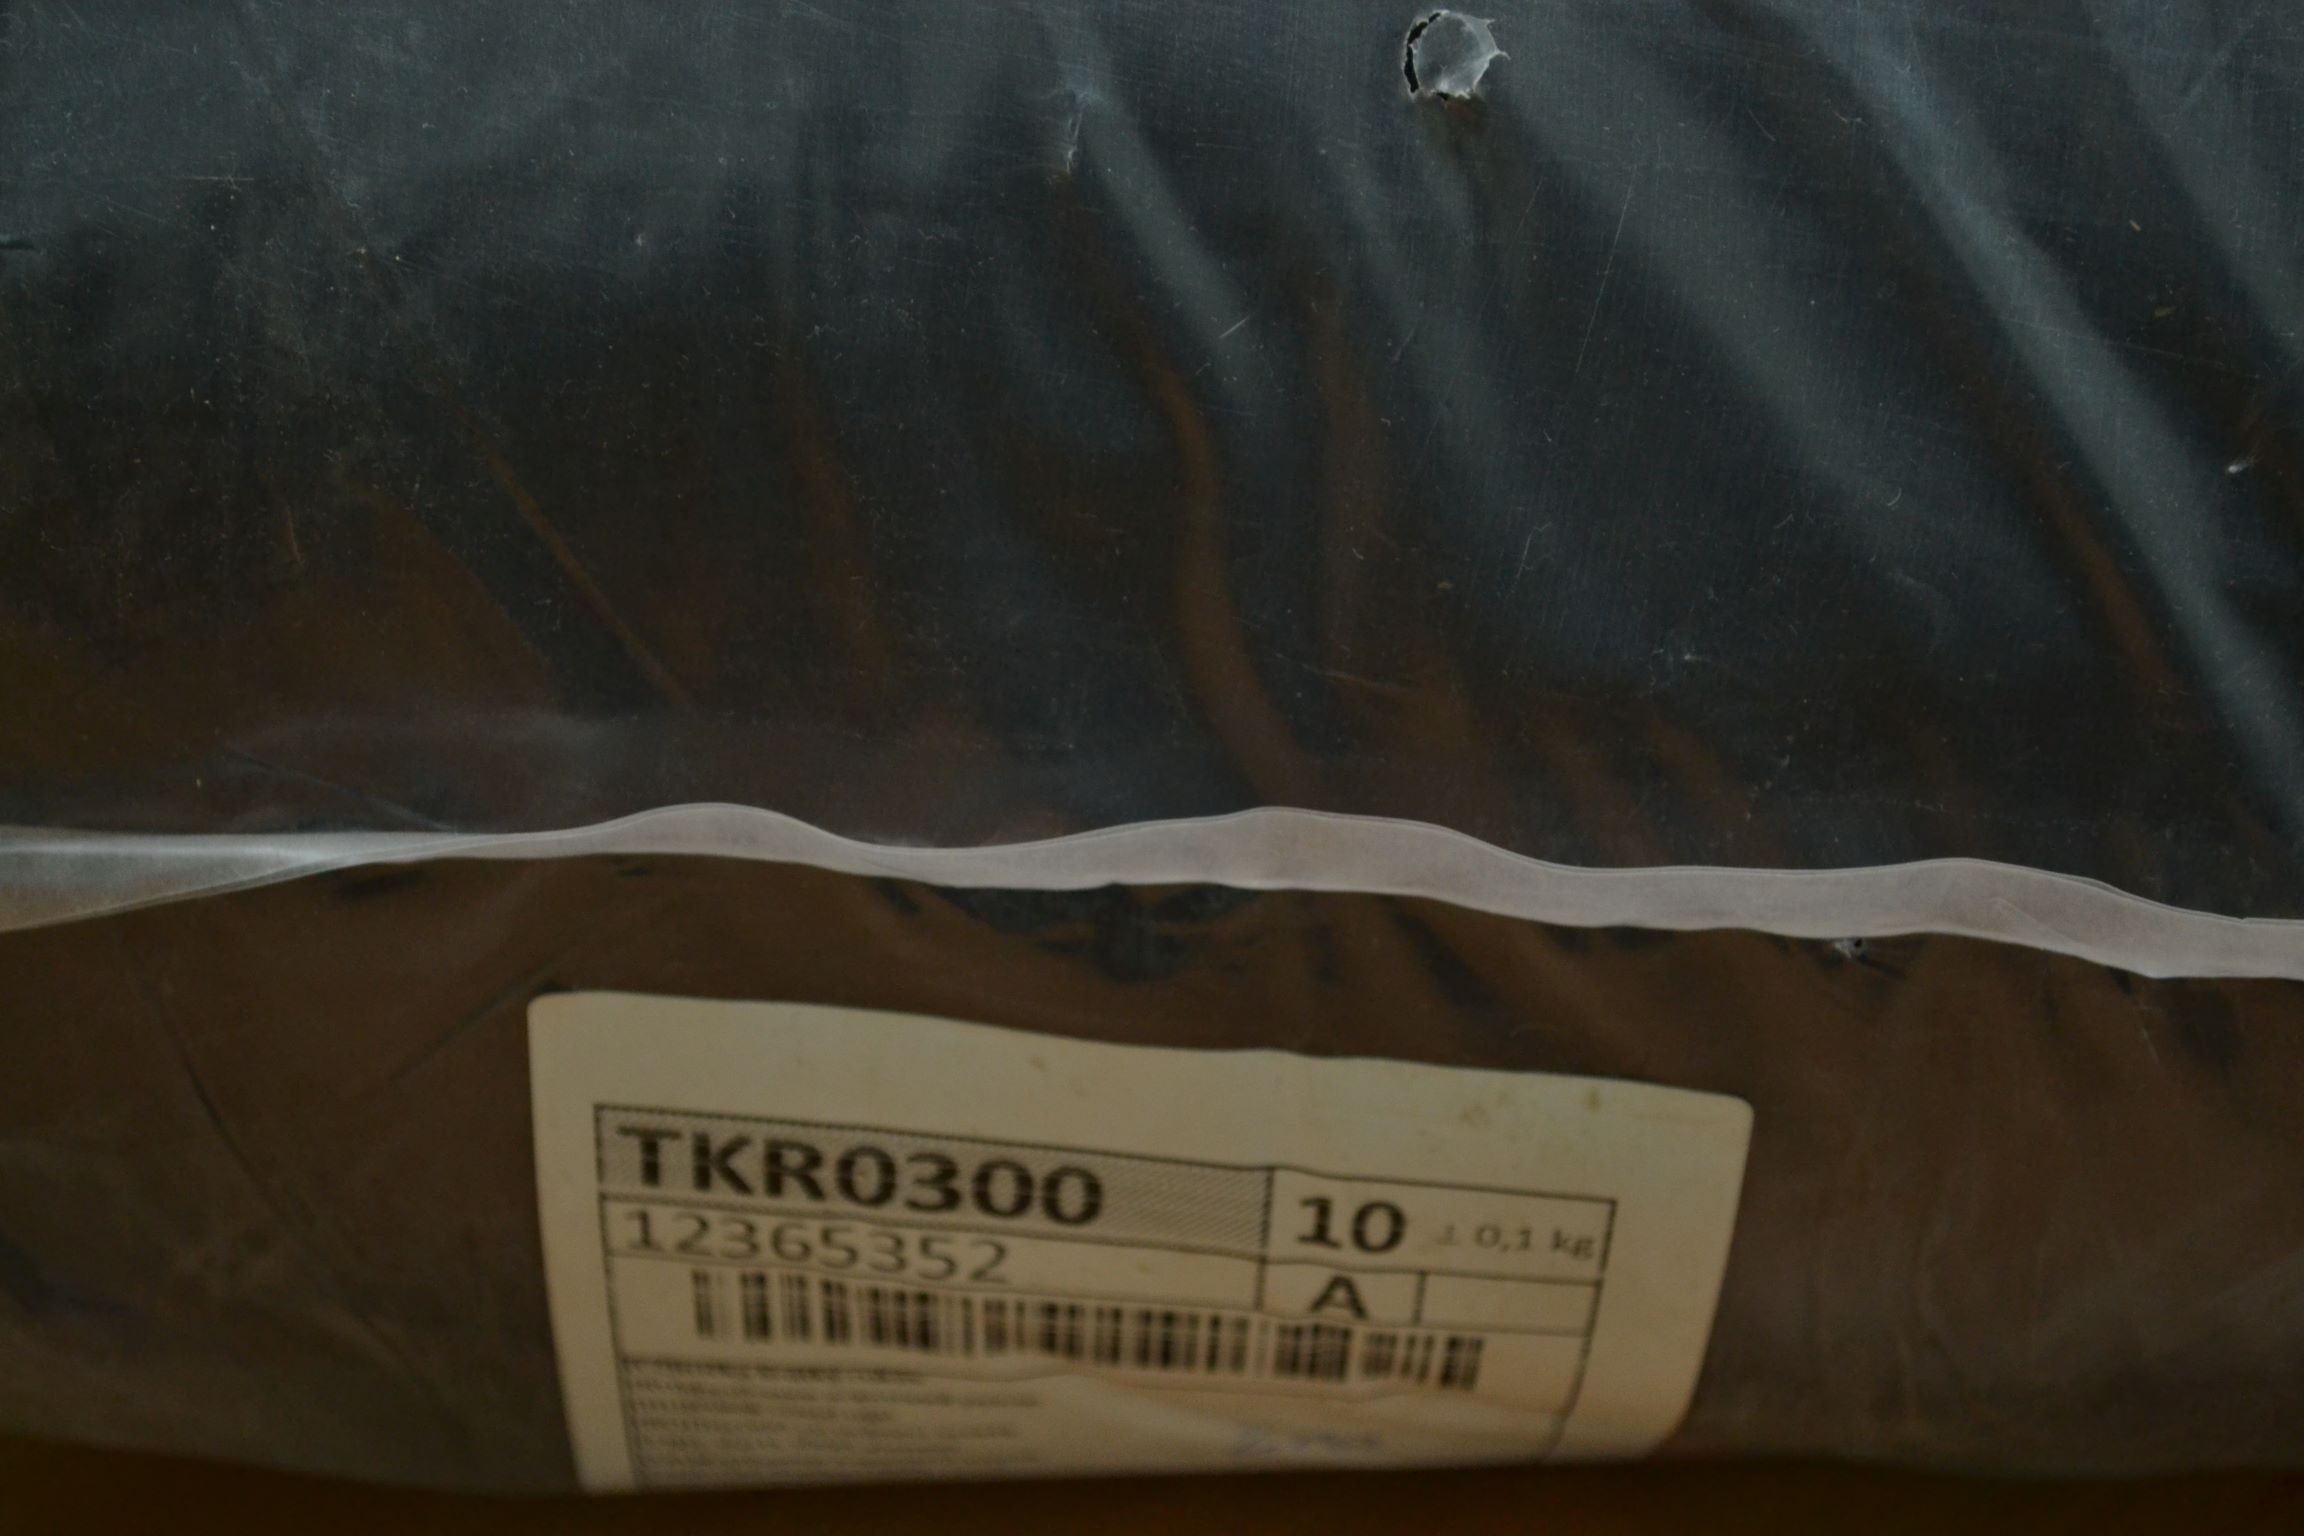 TKR0300 Майки с коротким рукавом; код мешка 12365352